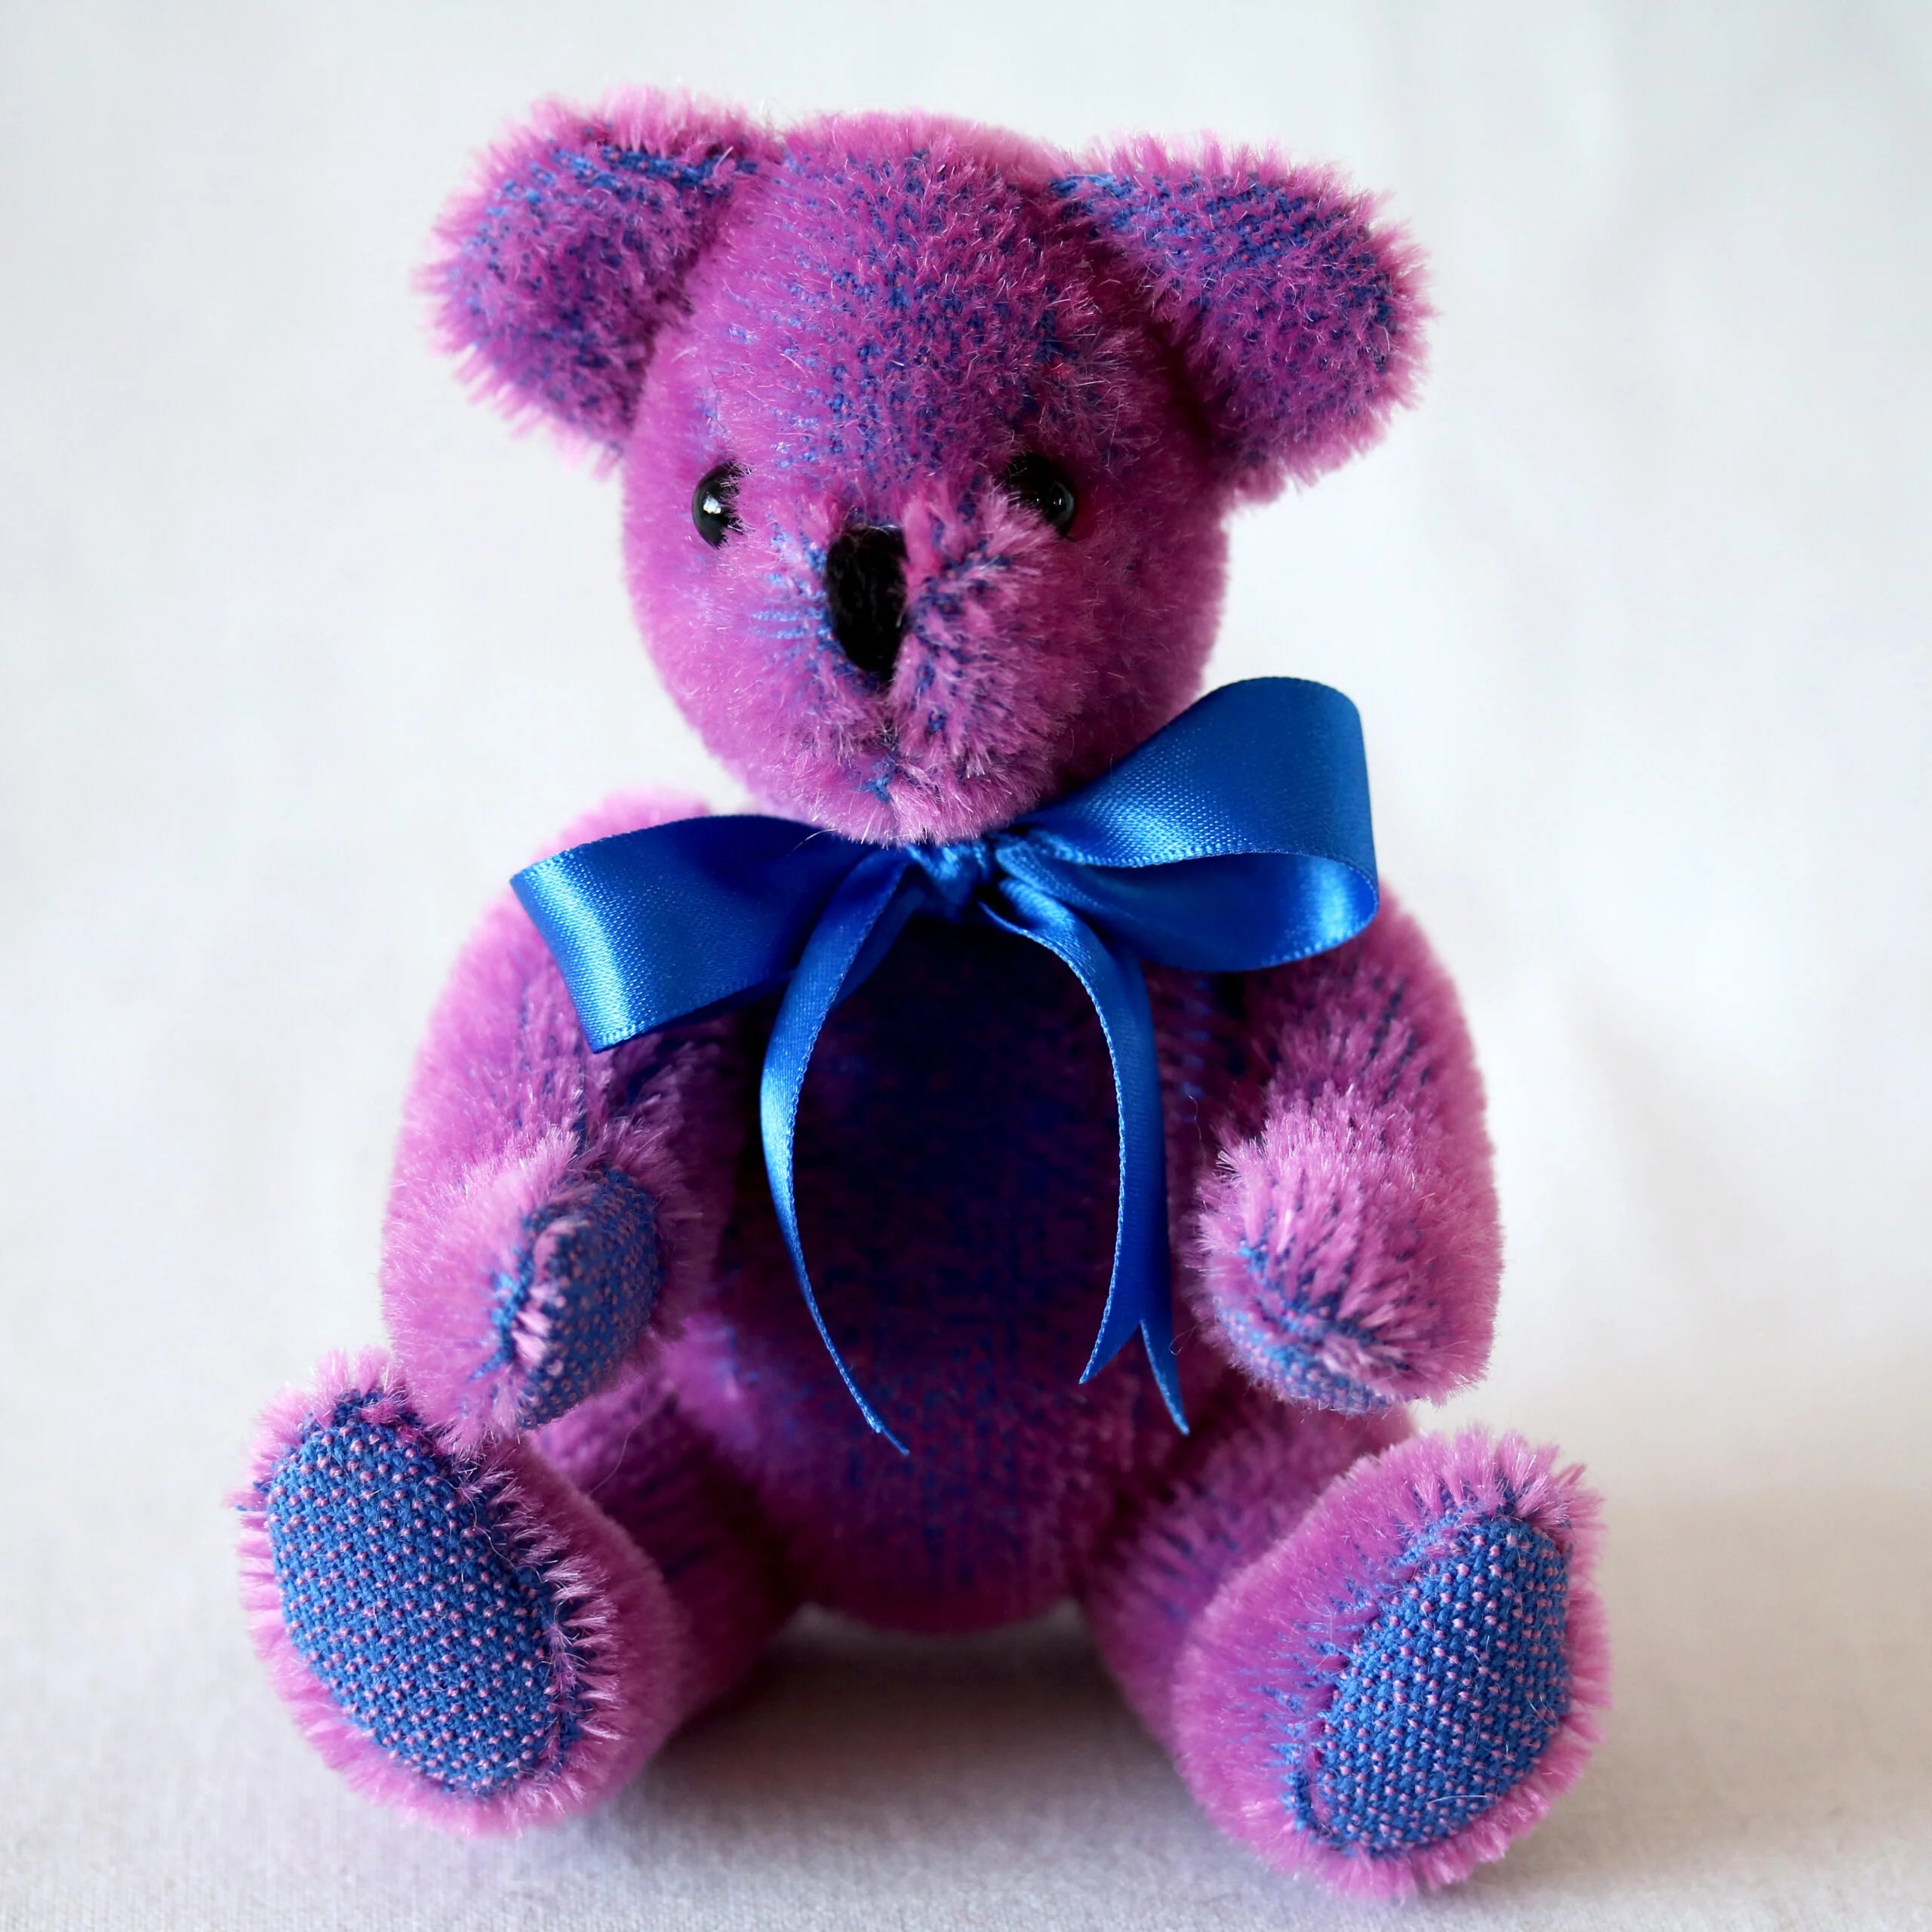 Purple Peter The Handmade Bear from Canterbury Bears.